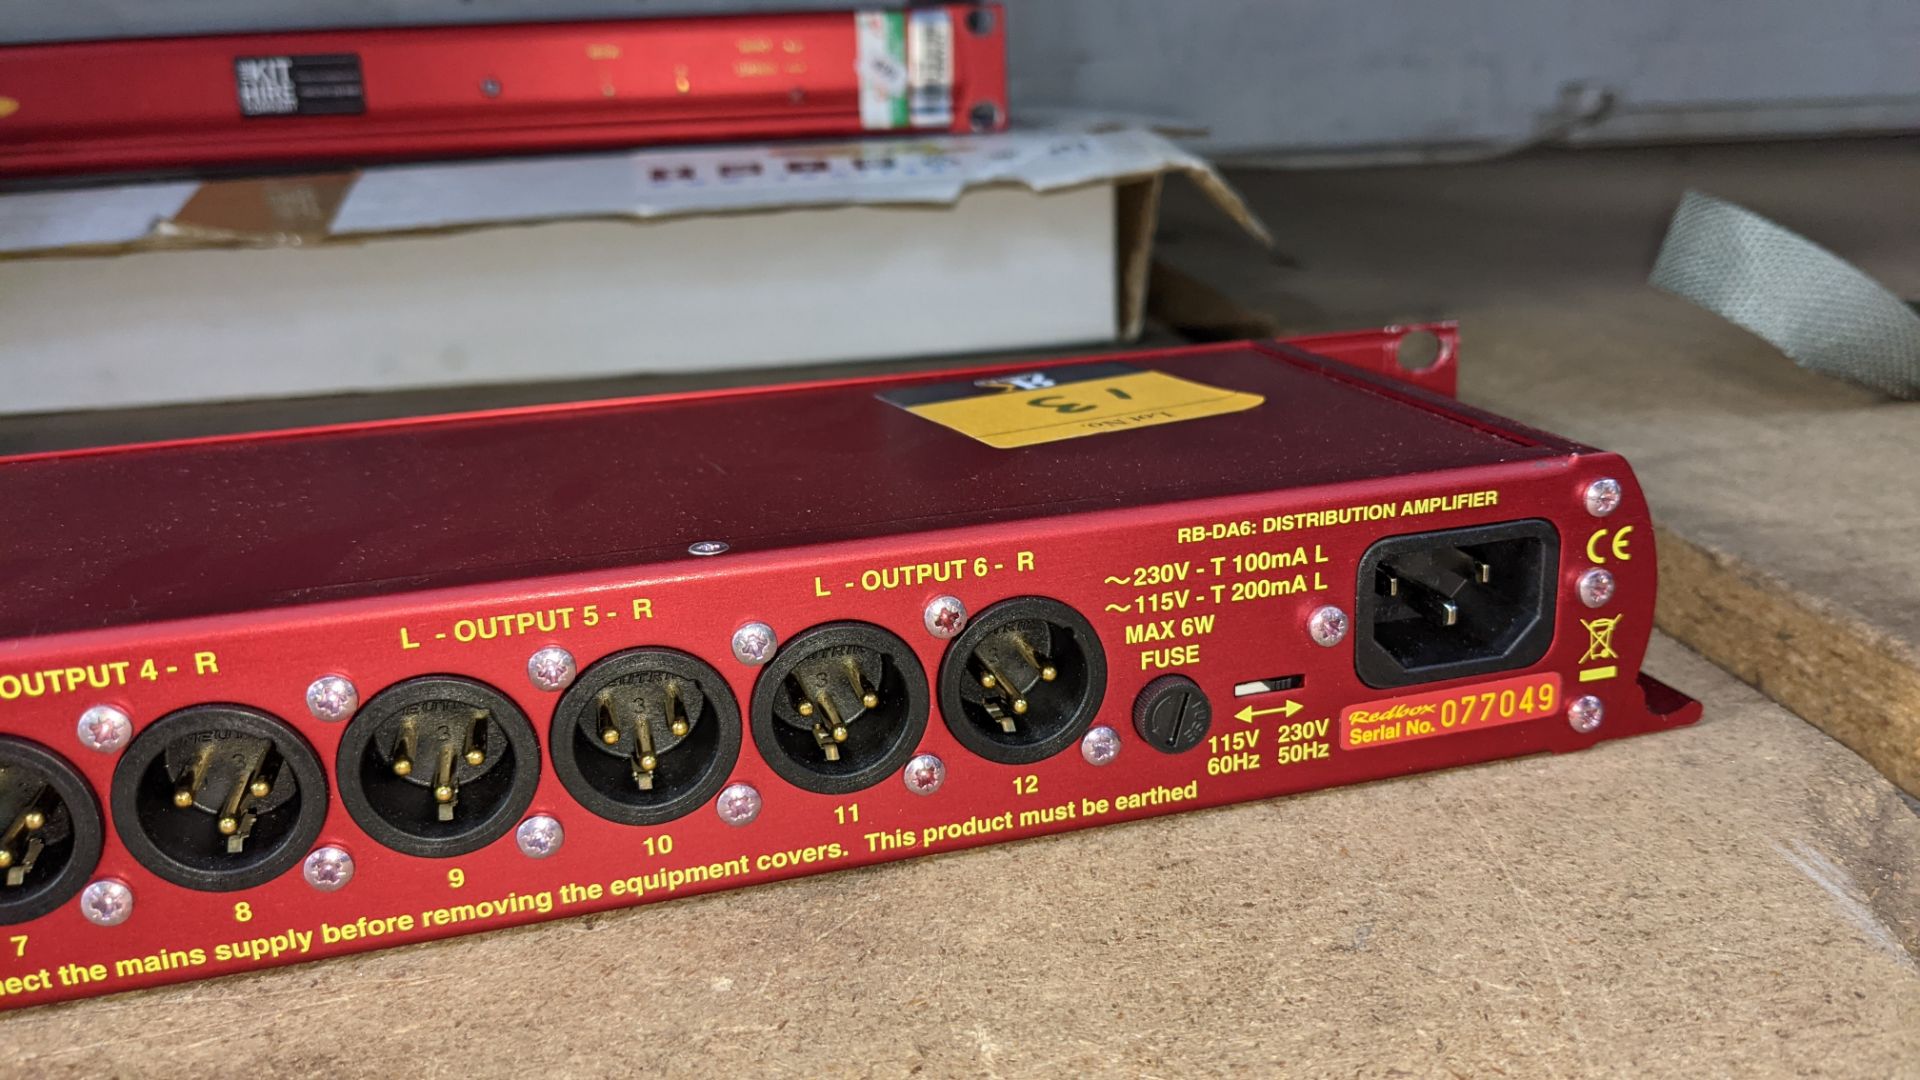 Sonifex Redbox model RB-DA6 distribution amplifier - Image 7 of 7